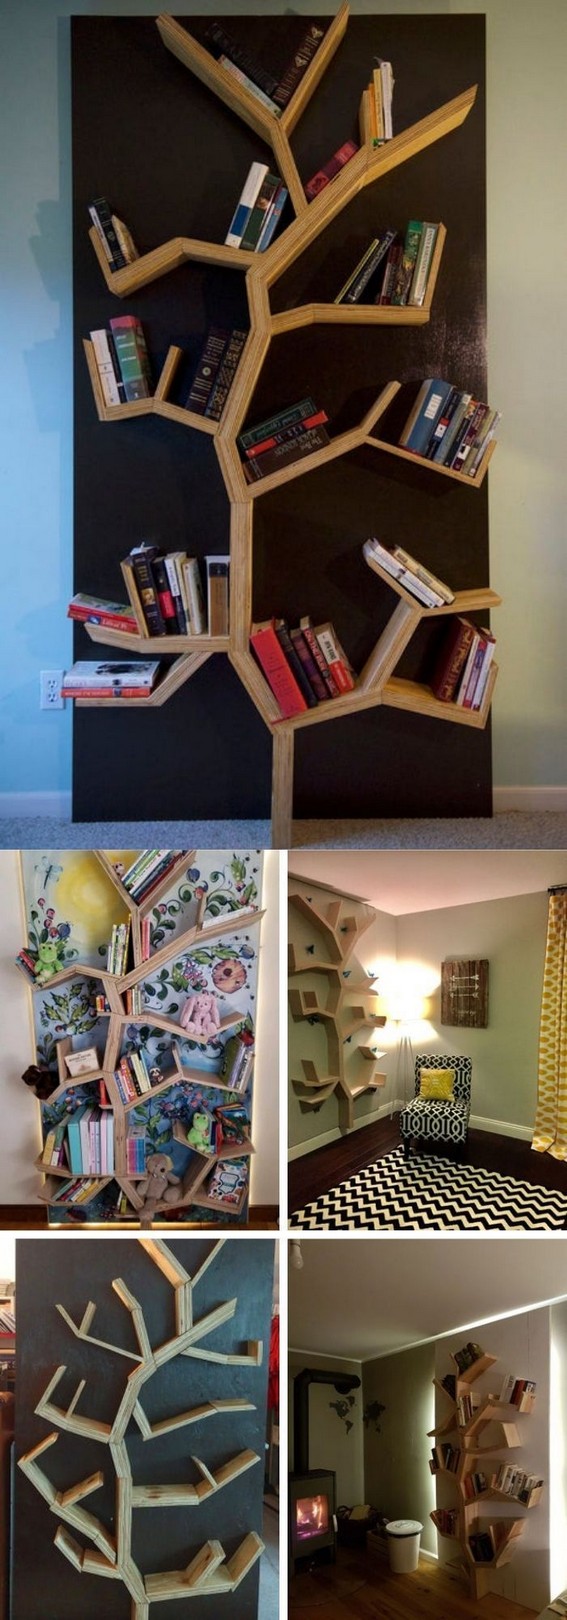 19+ Unique Bookshelf Ideas for Book Lovers - lmolnar